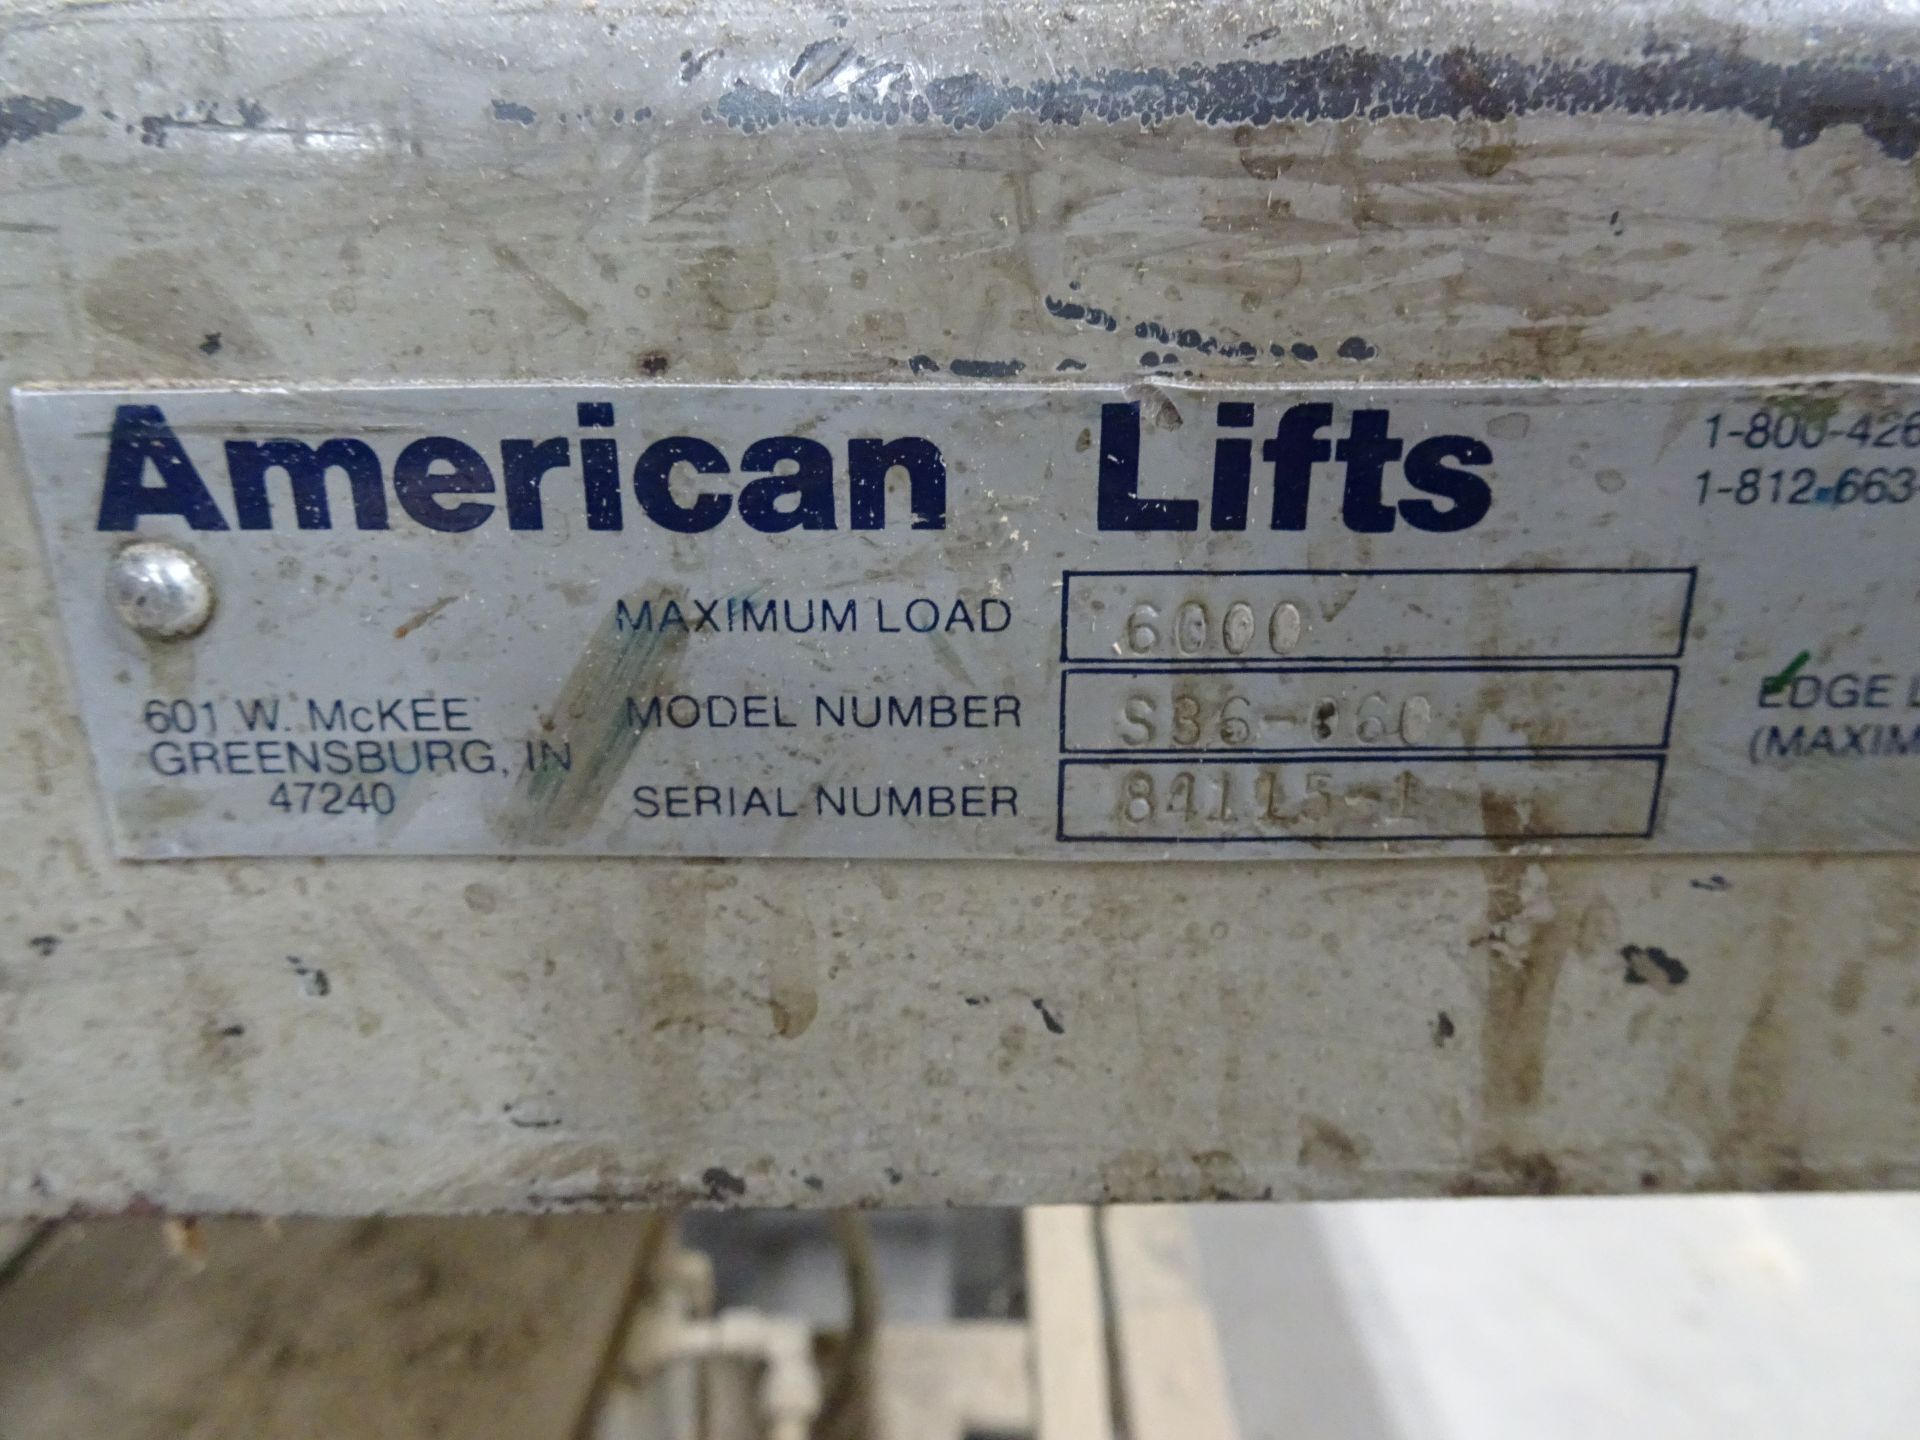 American Lift 6000 lb Capacity Scissor Lift Table - Image 2 of 3